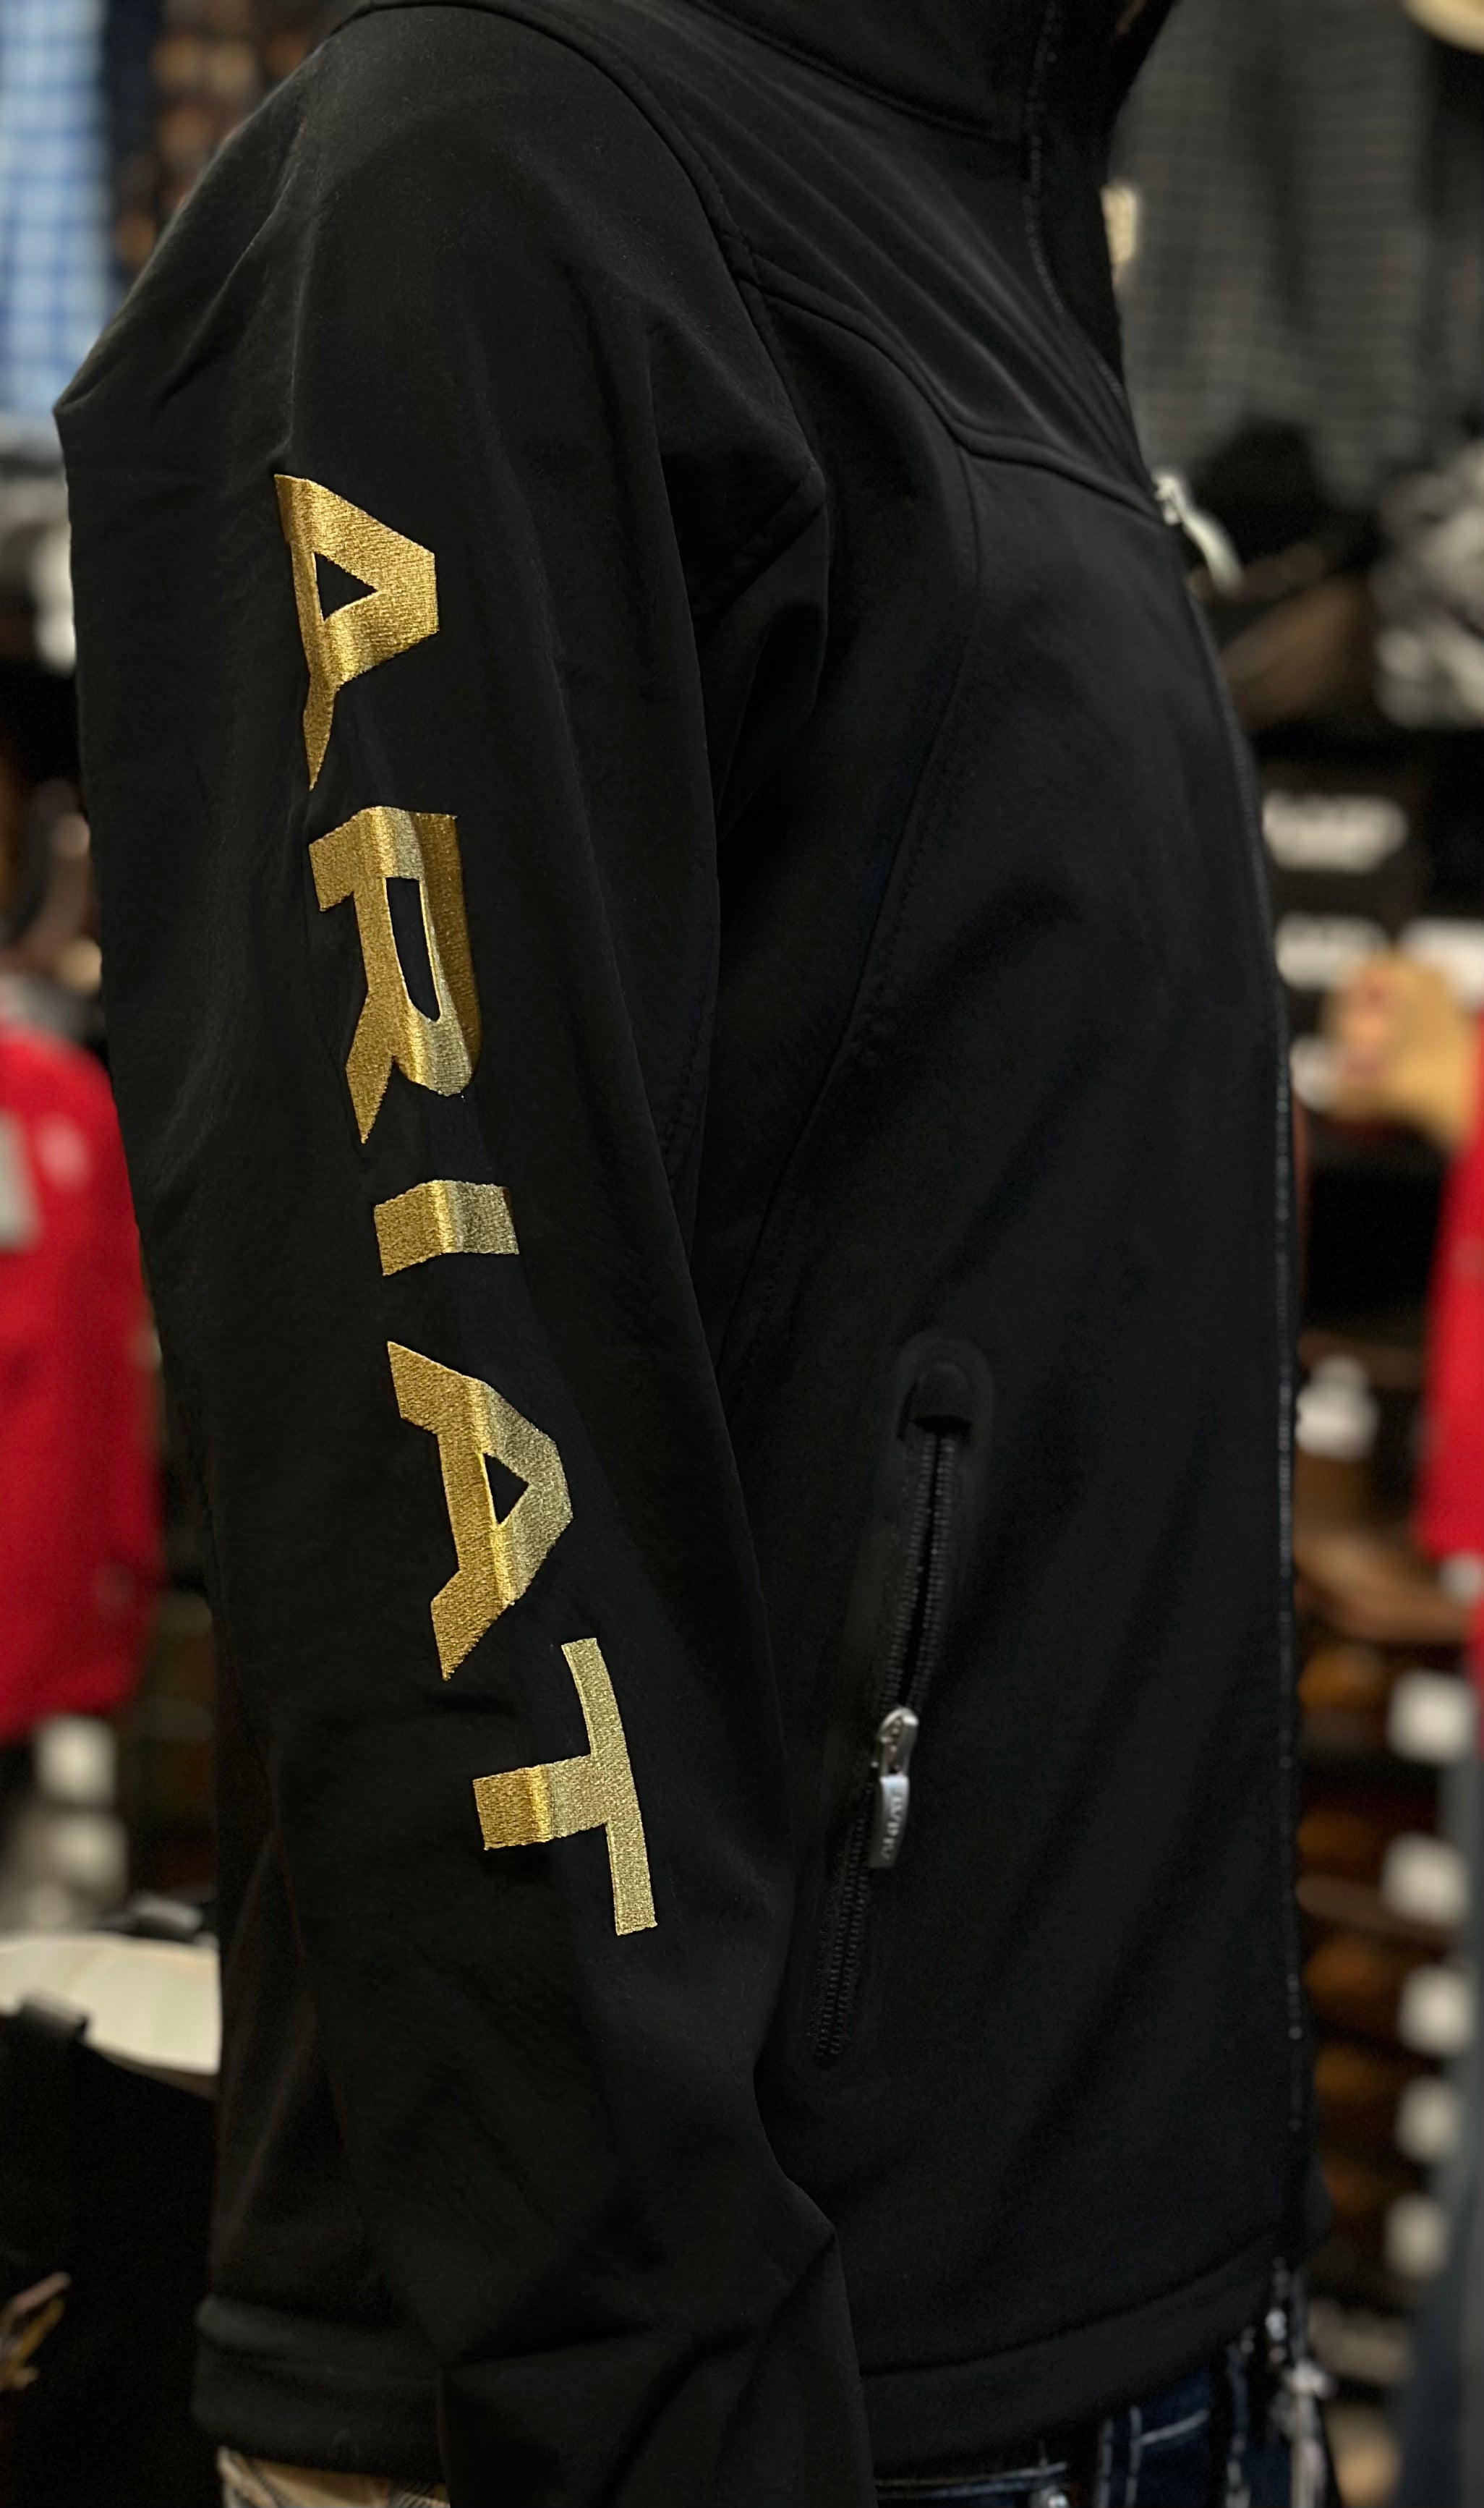 Women's Classic Team USA/MEX Softshell Jacket in Black, Size: Medium by  Ariat